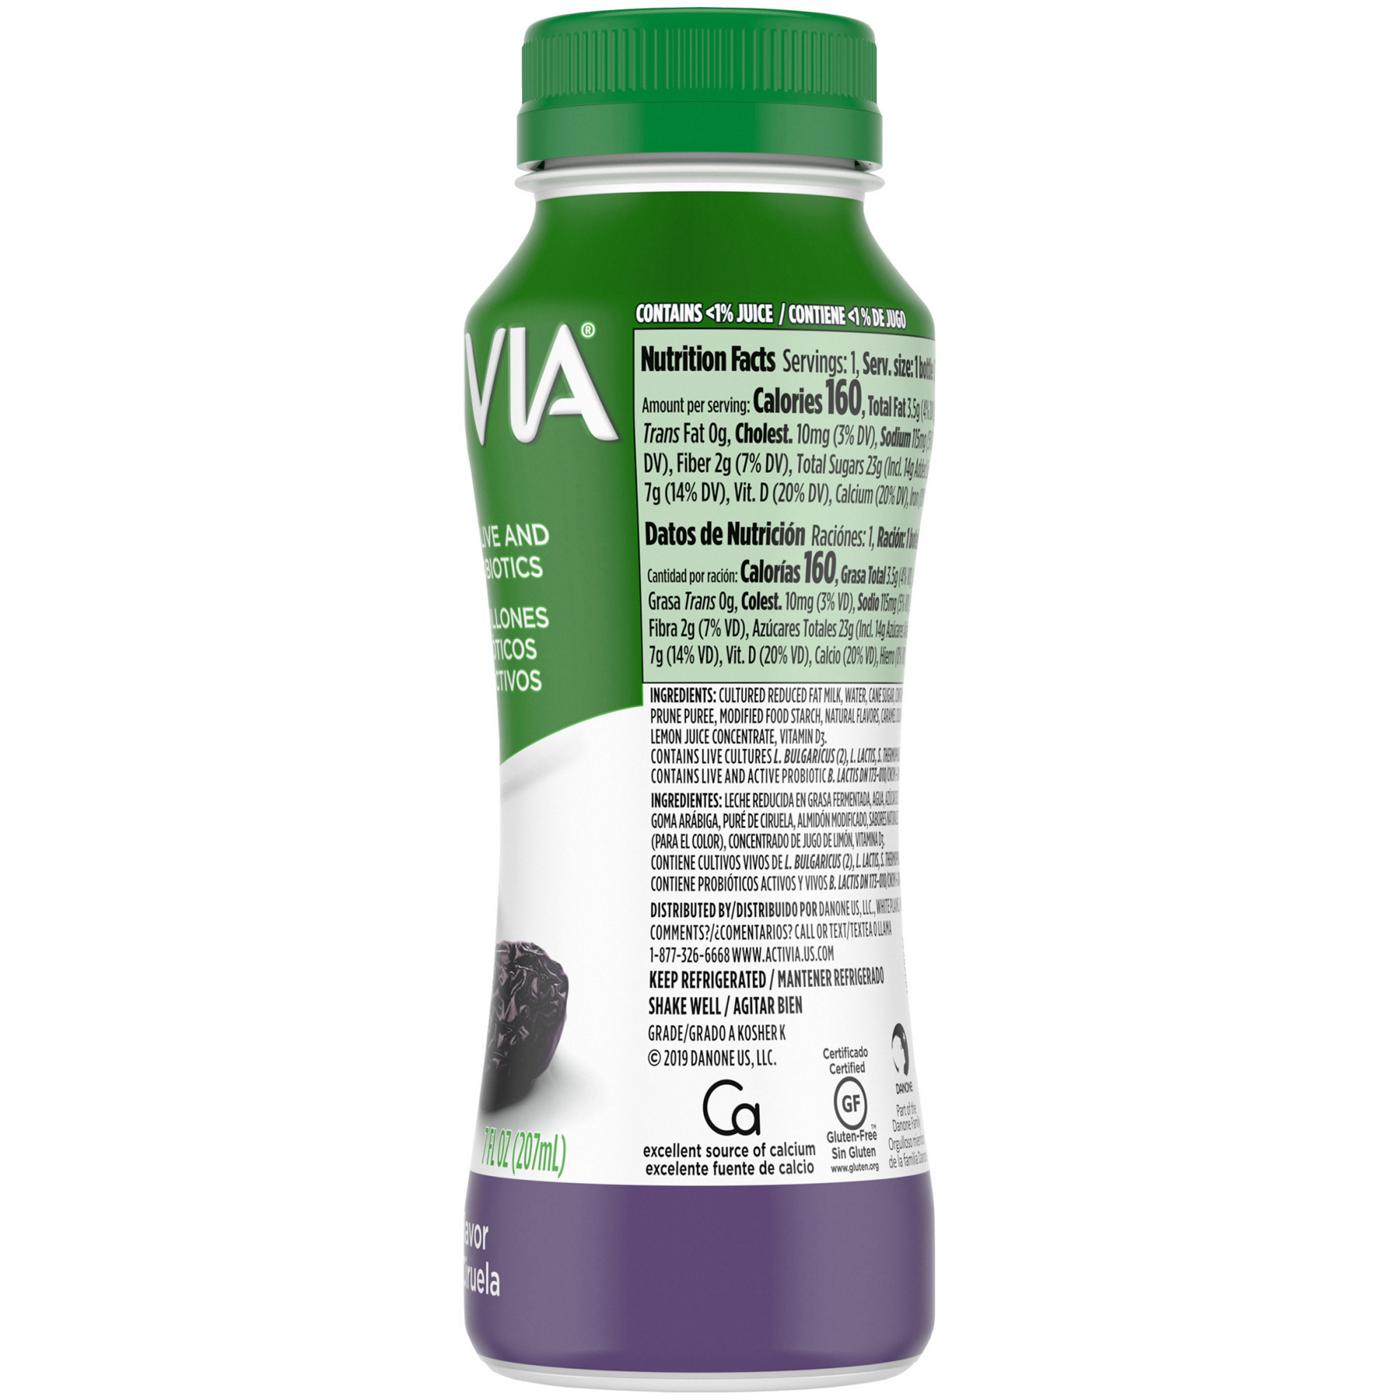 Activia Probiotic Dailies Strawberry Yogurt Drink - Shop Yogurt at H-E-B